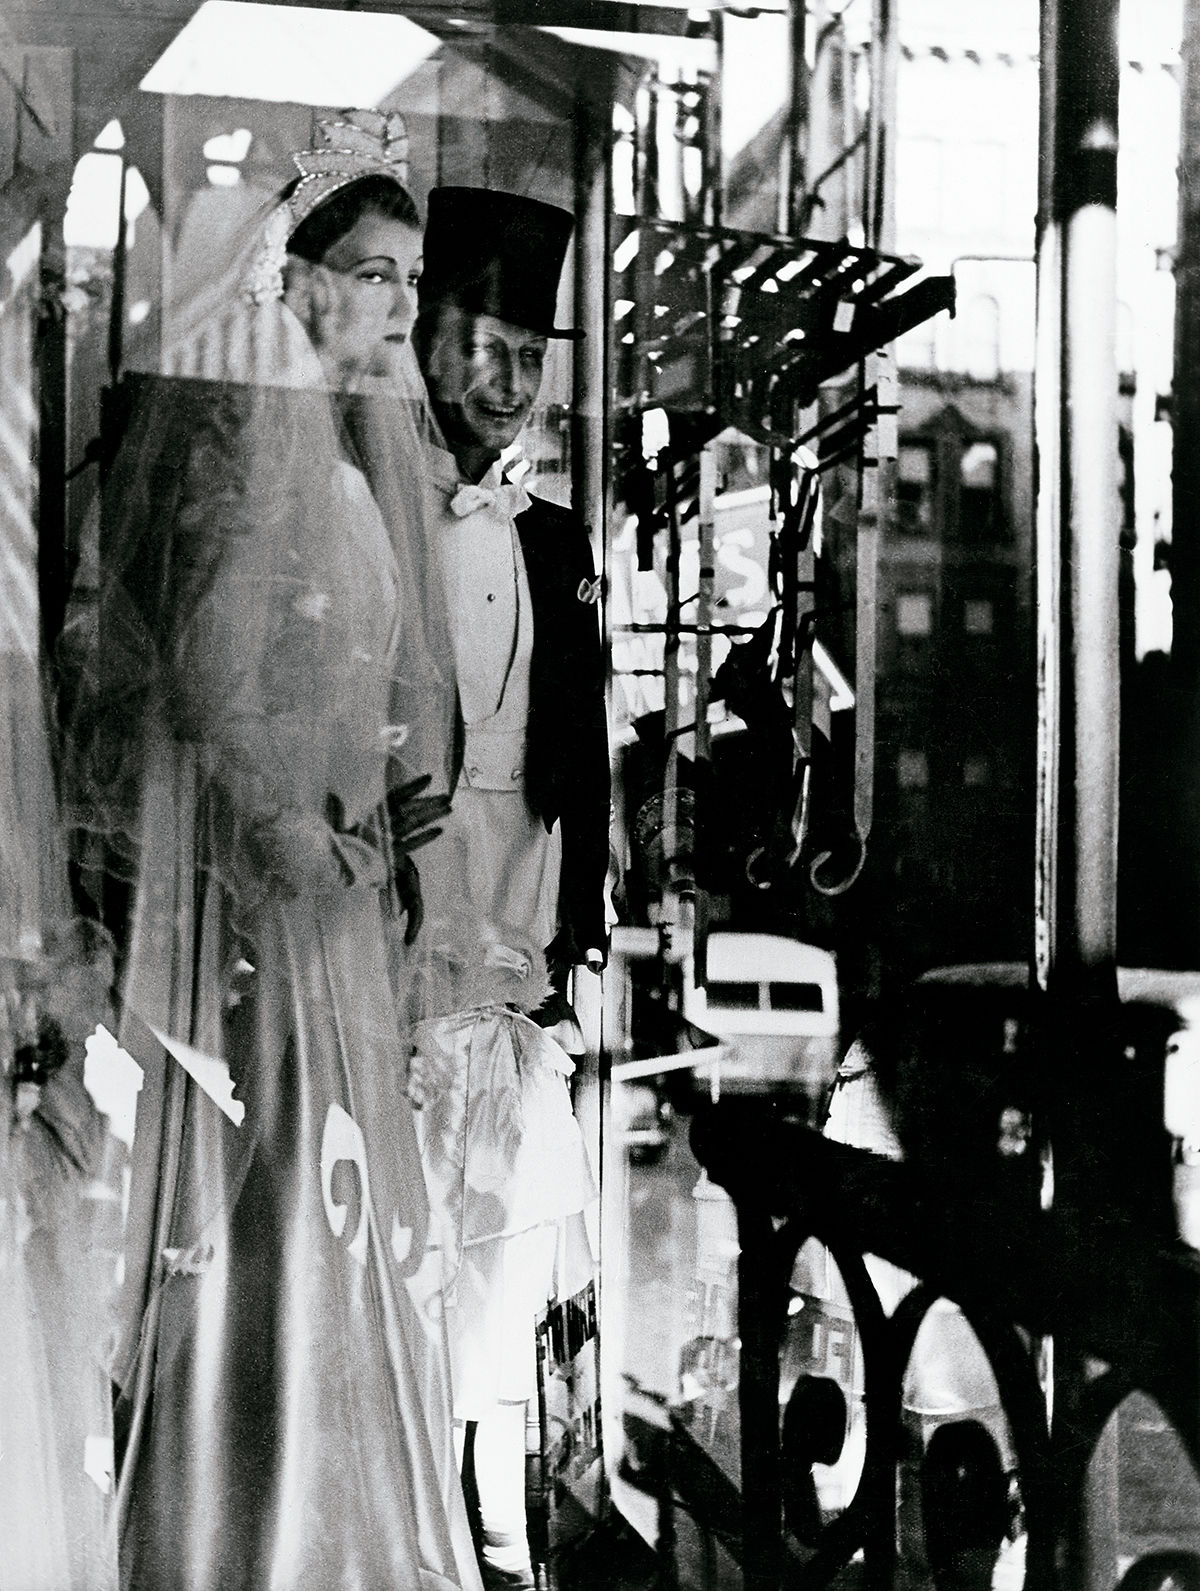 Window, Bridal Couple, New York © The Lisette Model Foundation Inc. © COLECCIONES Fundación MAPFRE